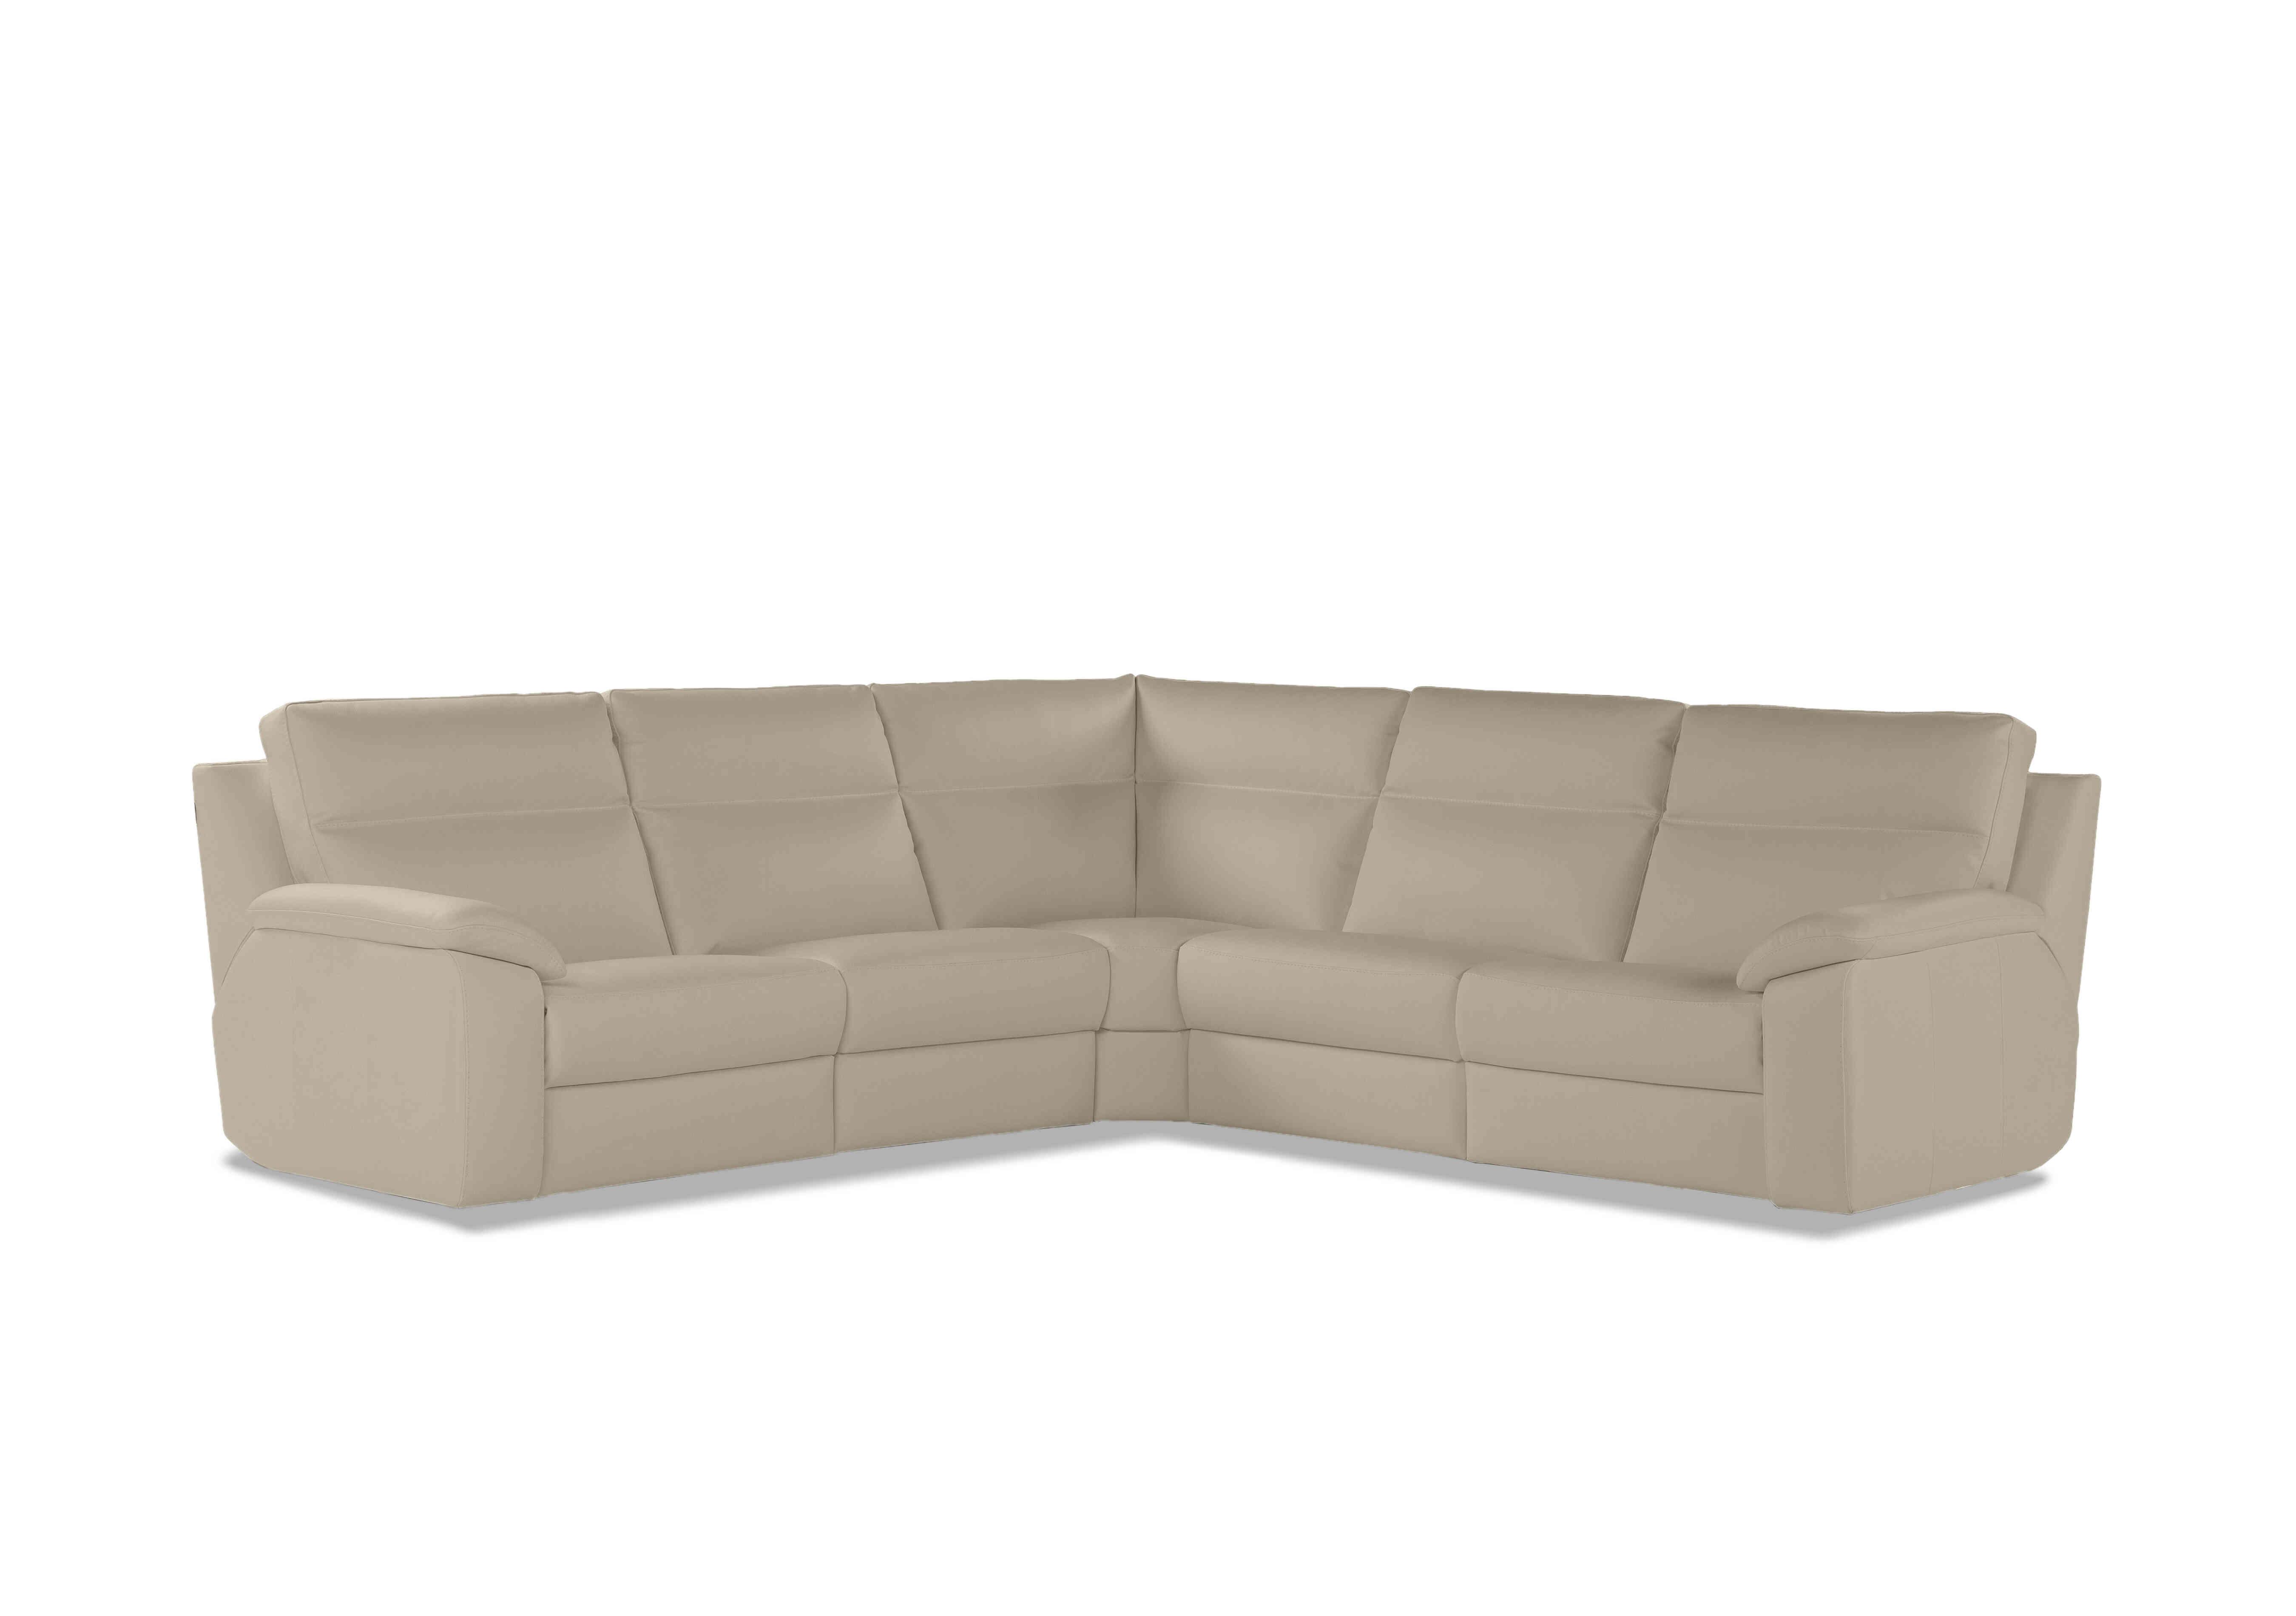 Pepino Large Leather Corner Sofa in 352 Torello Fango on Furniture Village